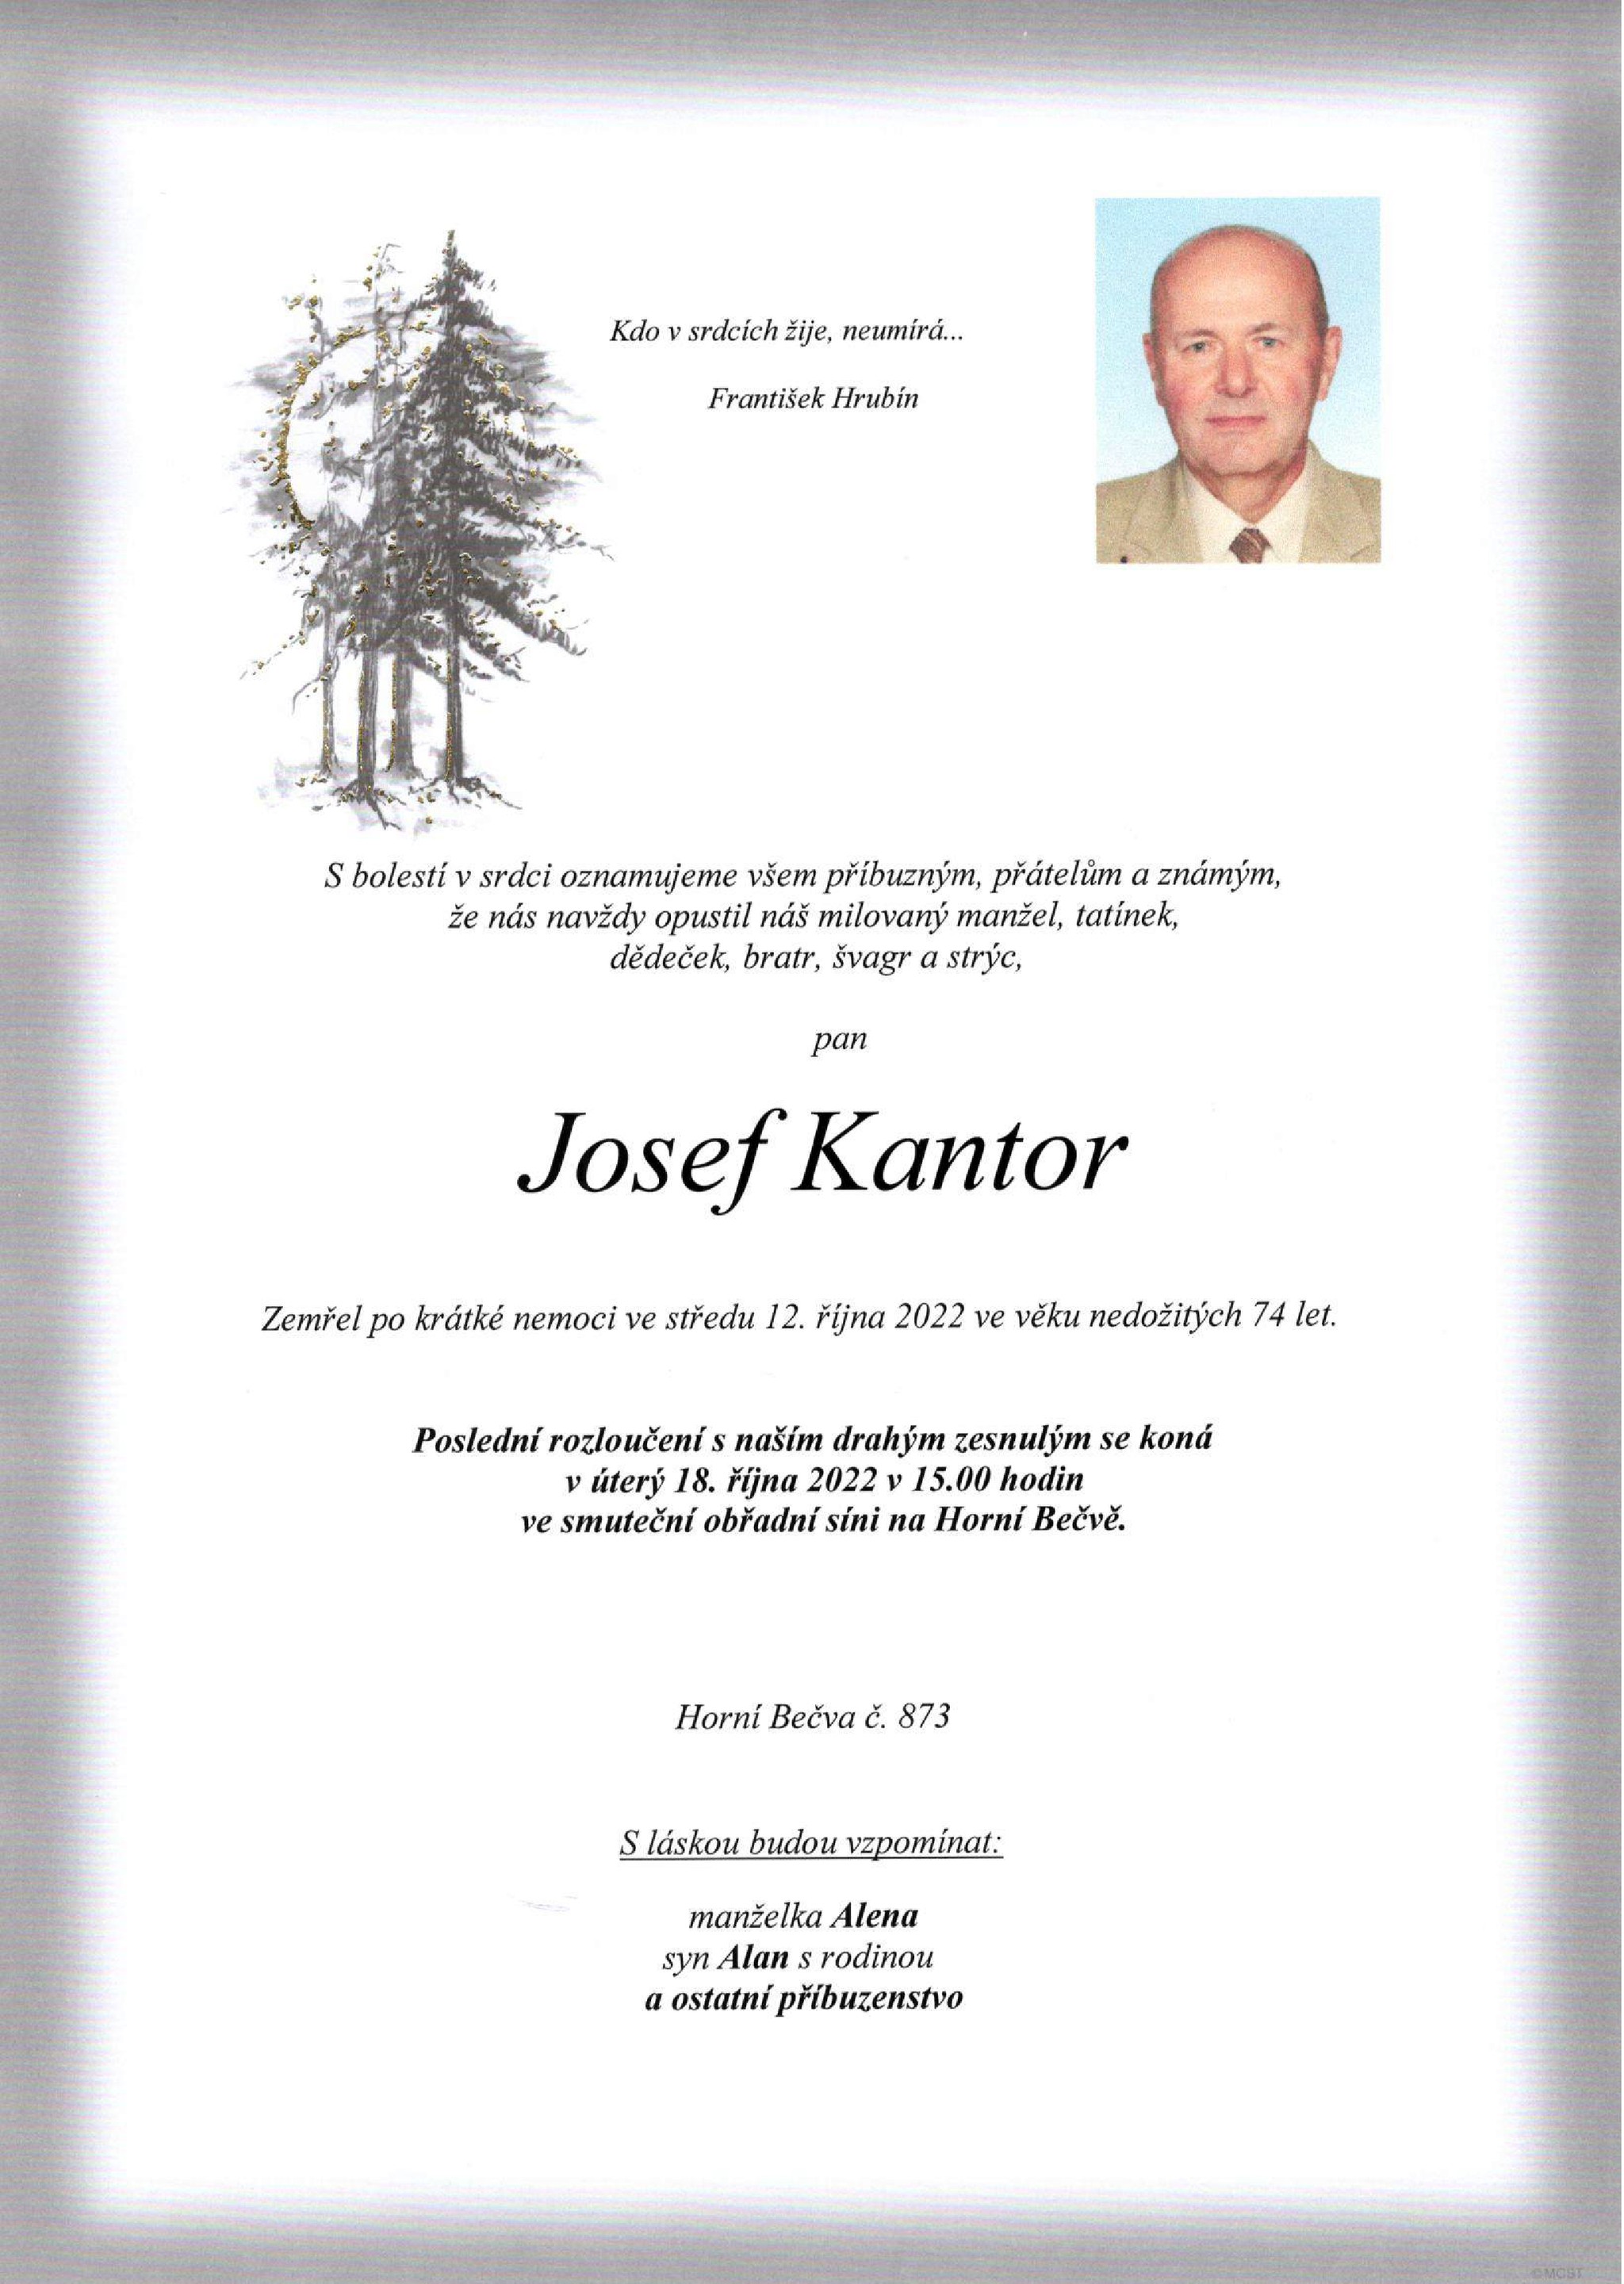 Josef Kantor